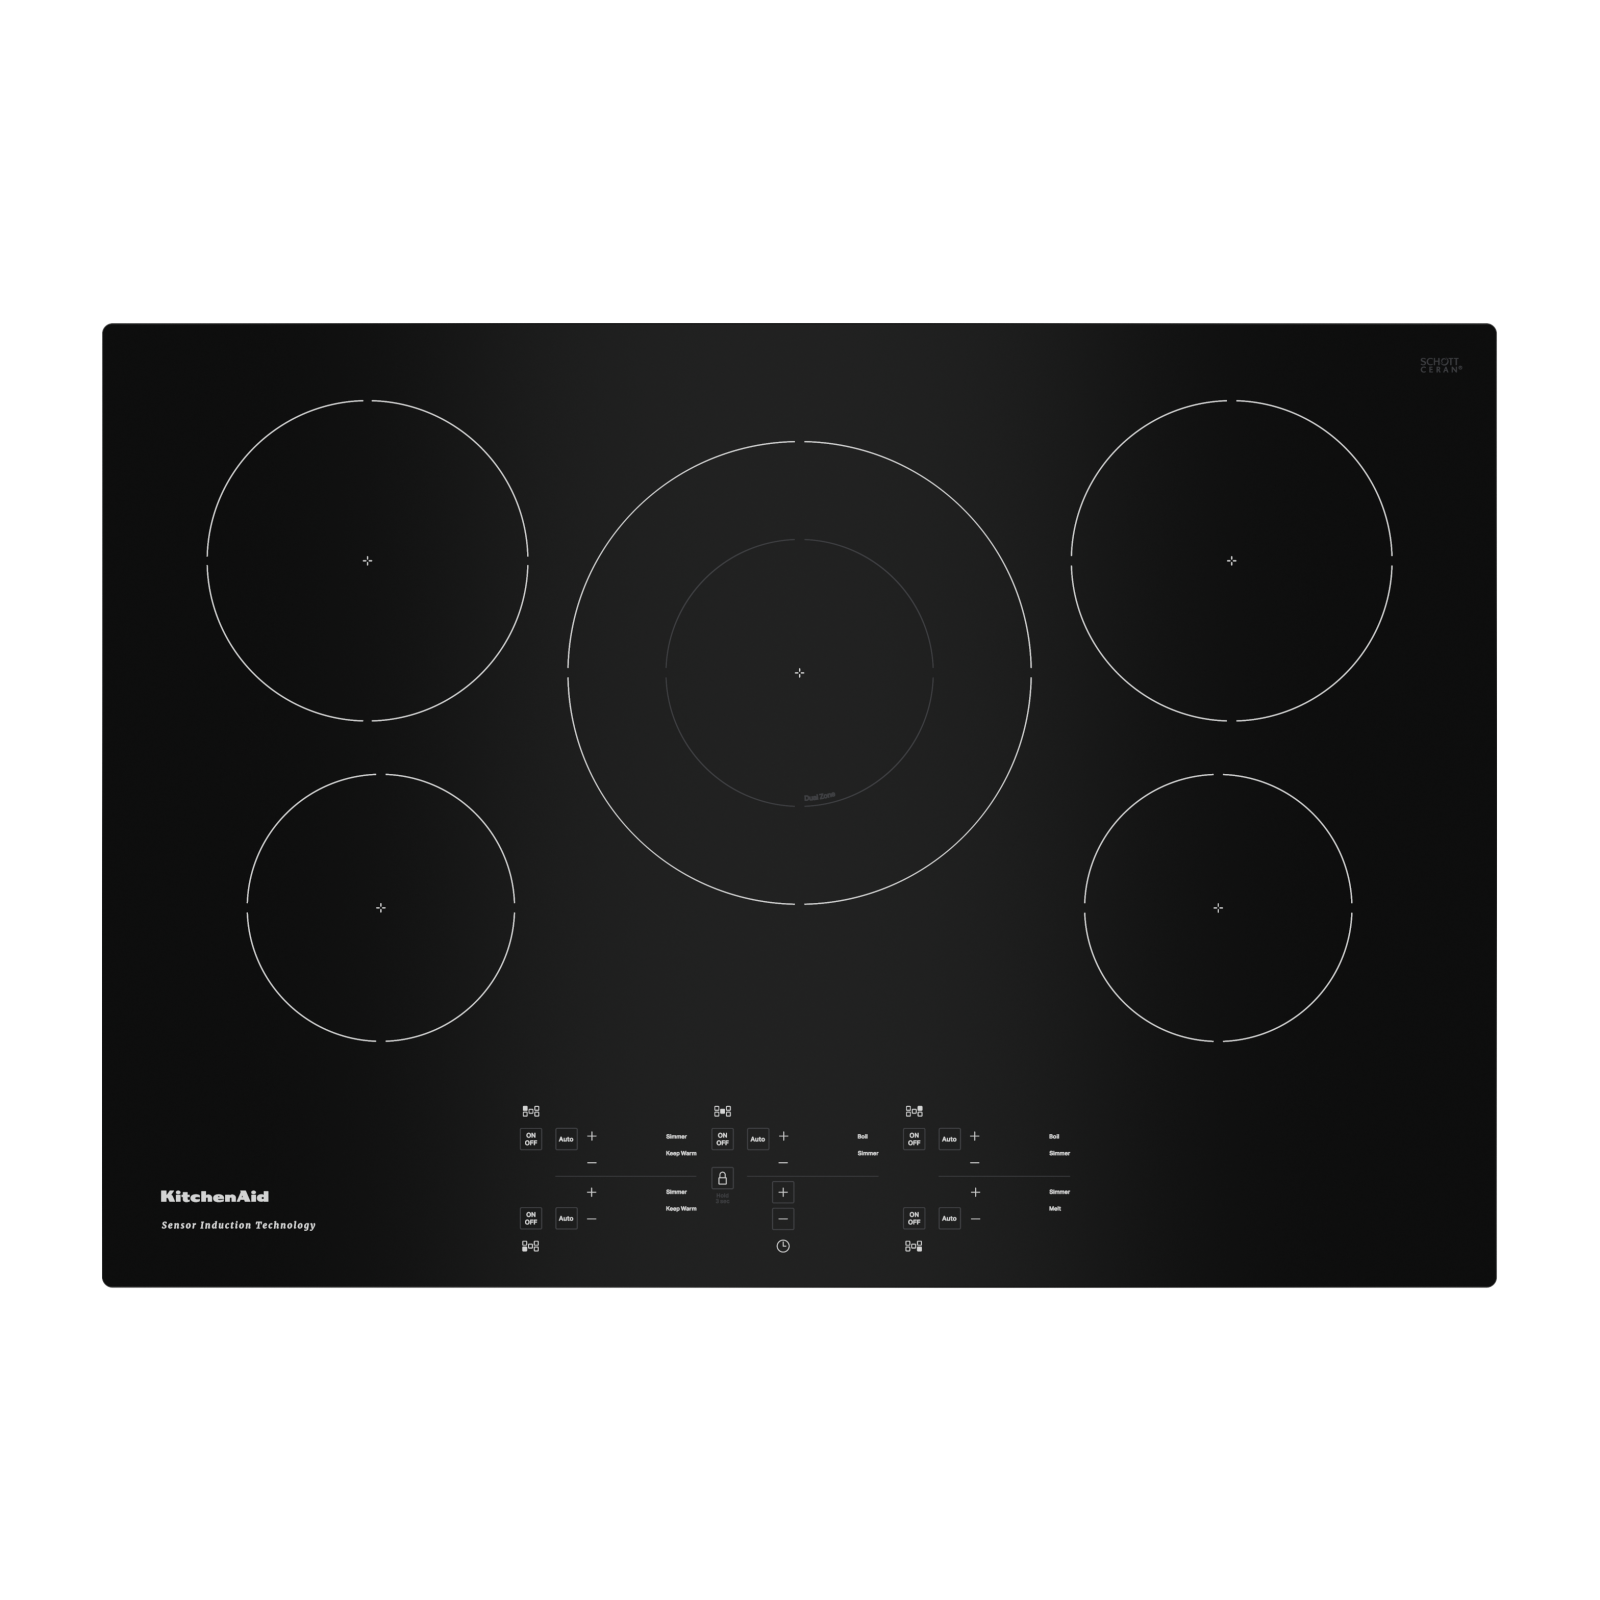 KitchenAid - 30.75 inch wide Induction Cooktop in Black - KCIG550JBL